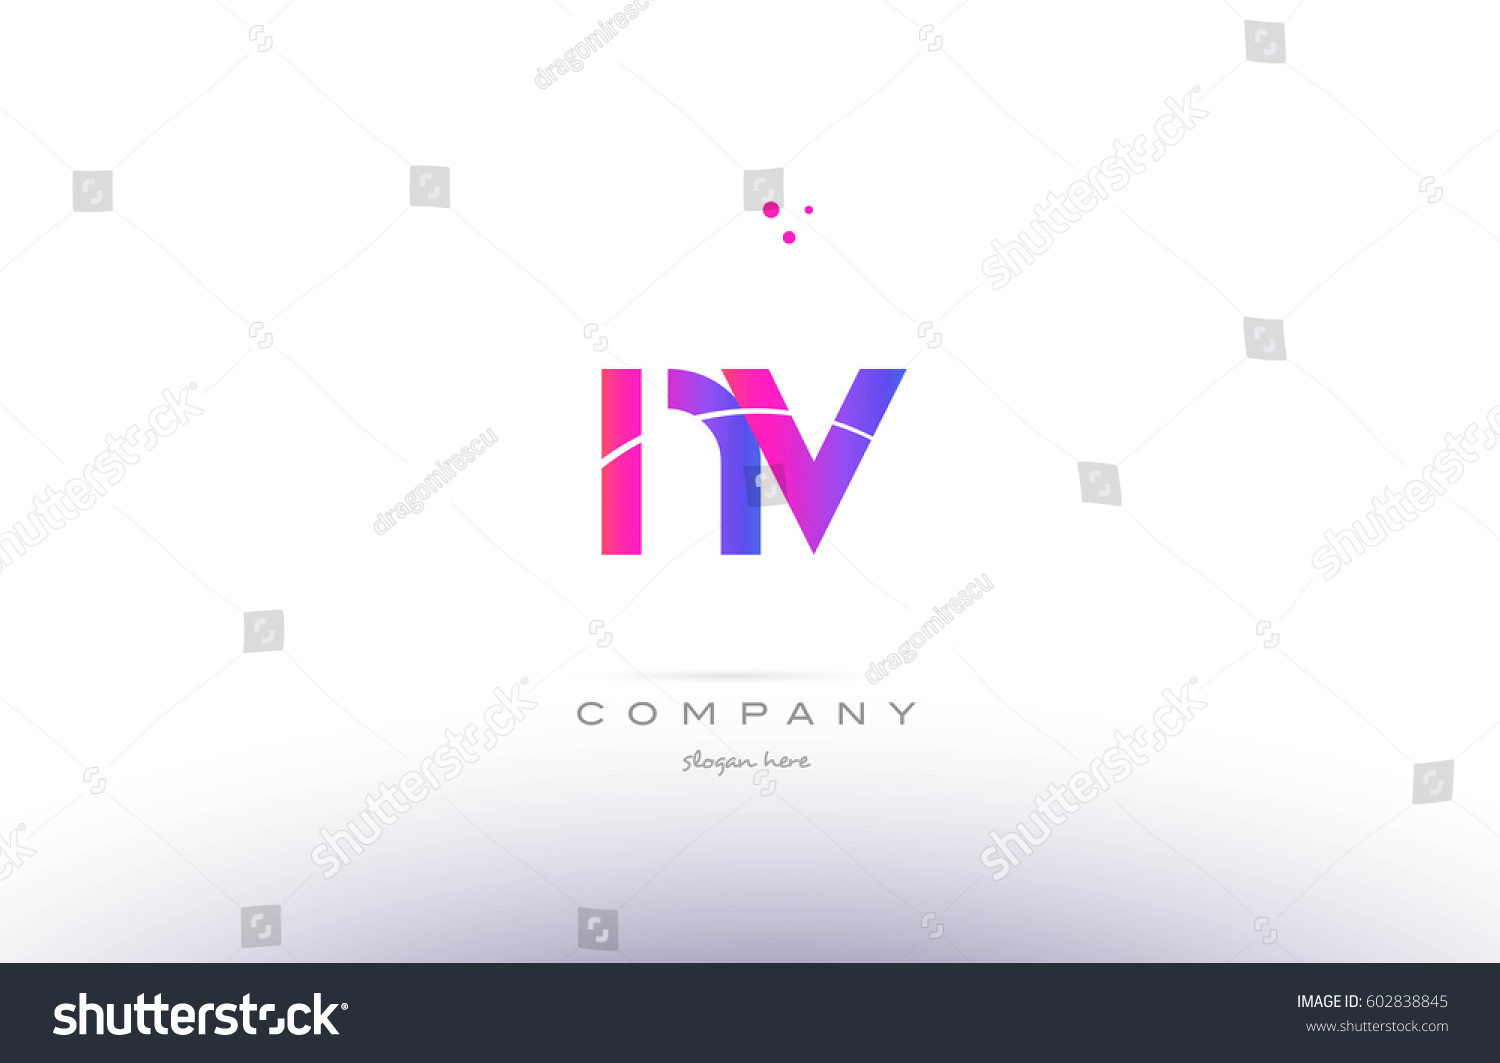 Creative Purple Company Logo Template photo - 1